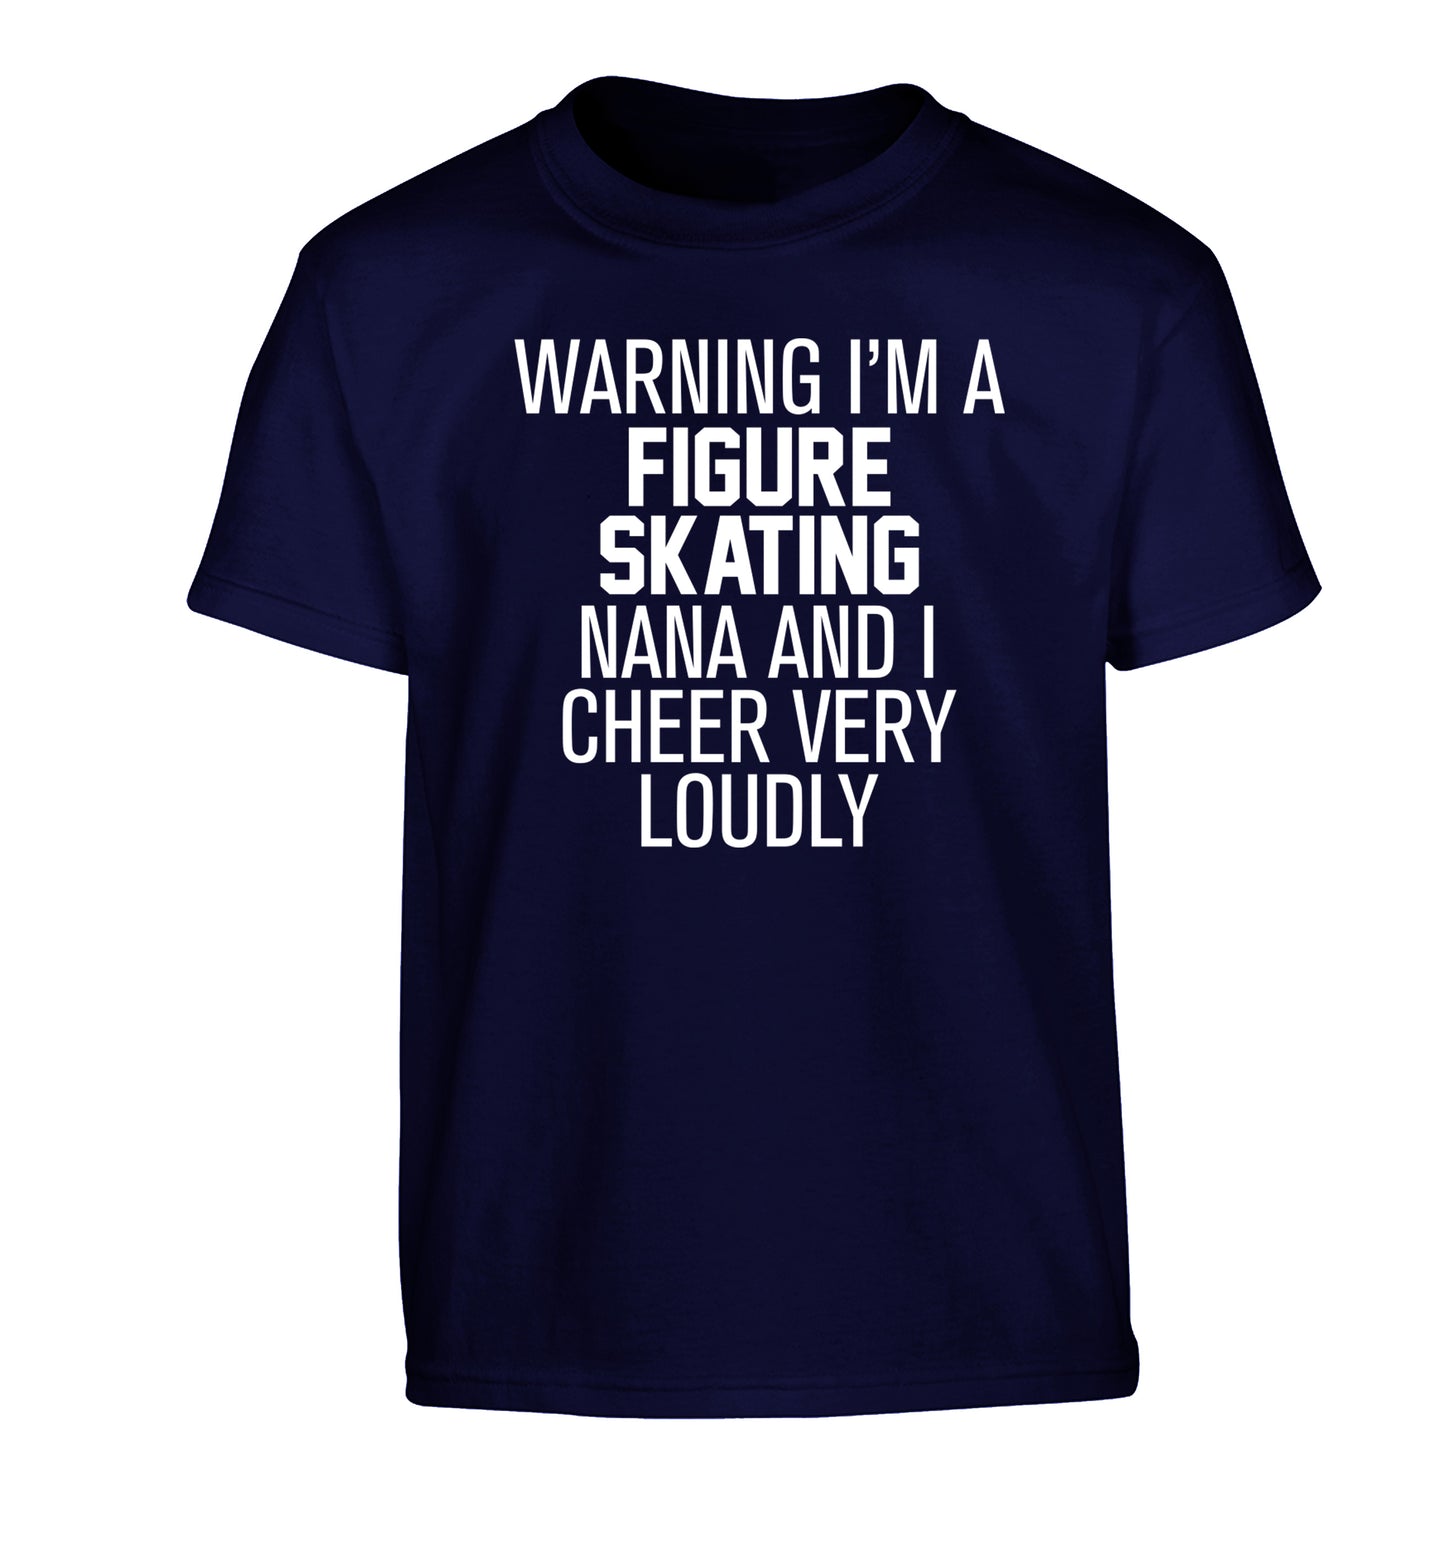 Warning I'm a figure skating nana and I cheer very loudly Children's navy Tshirt 12-14 Years